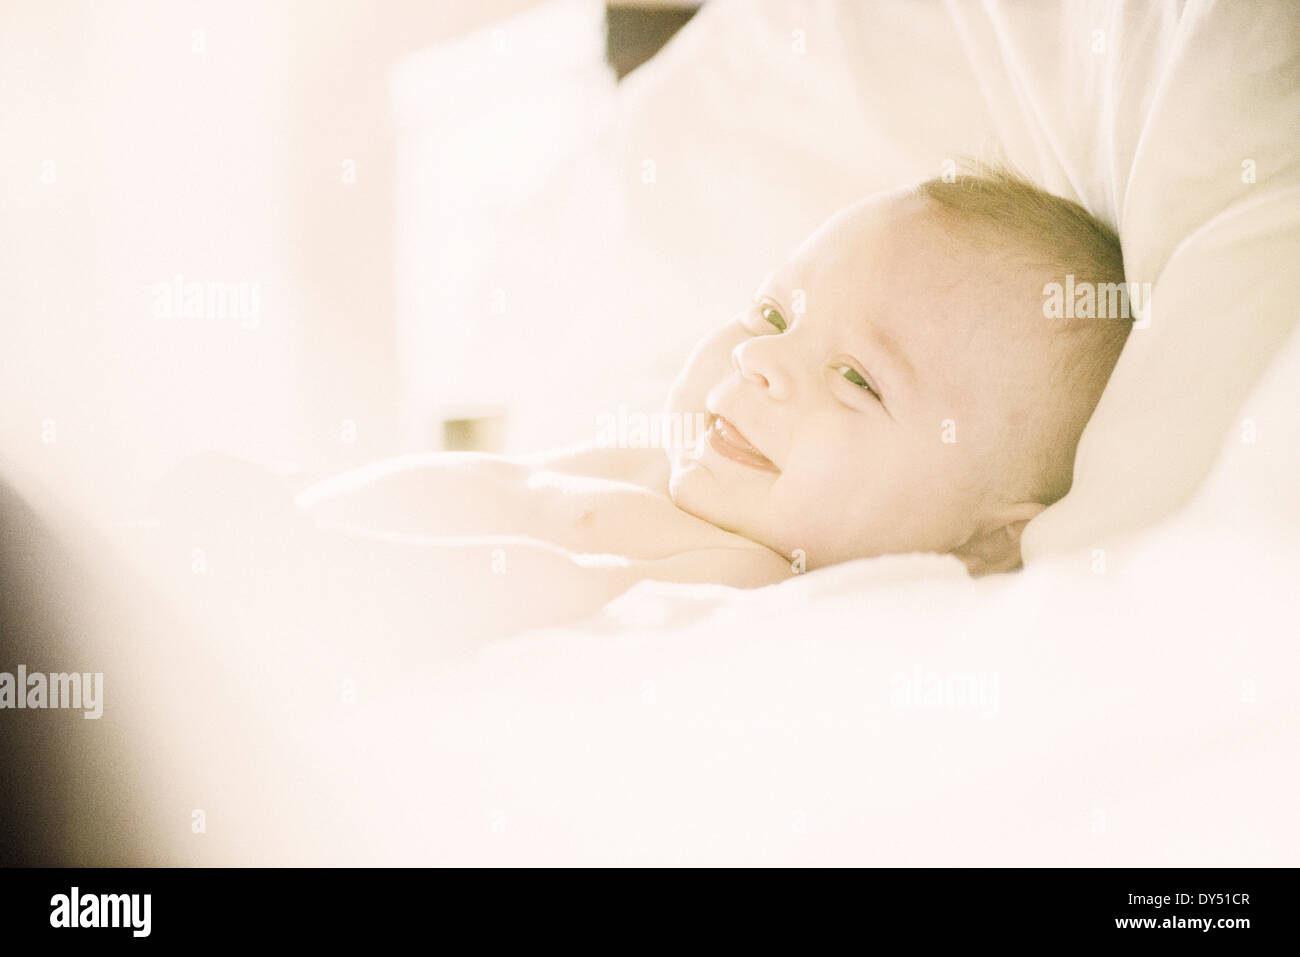 Smiling baby boy lying in crib Stock Photo